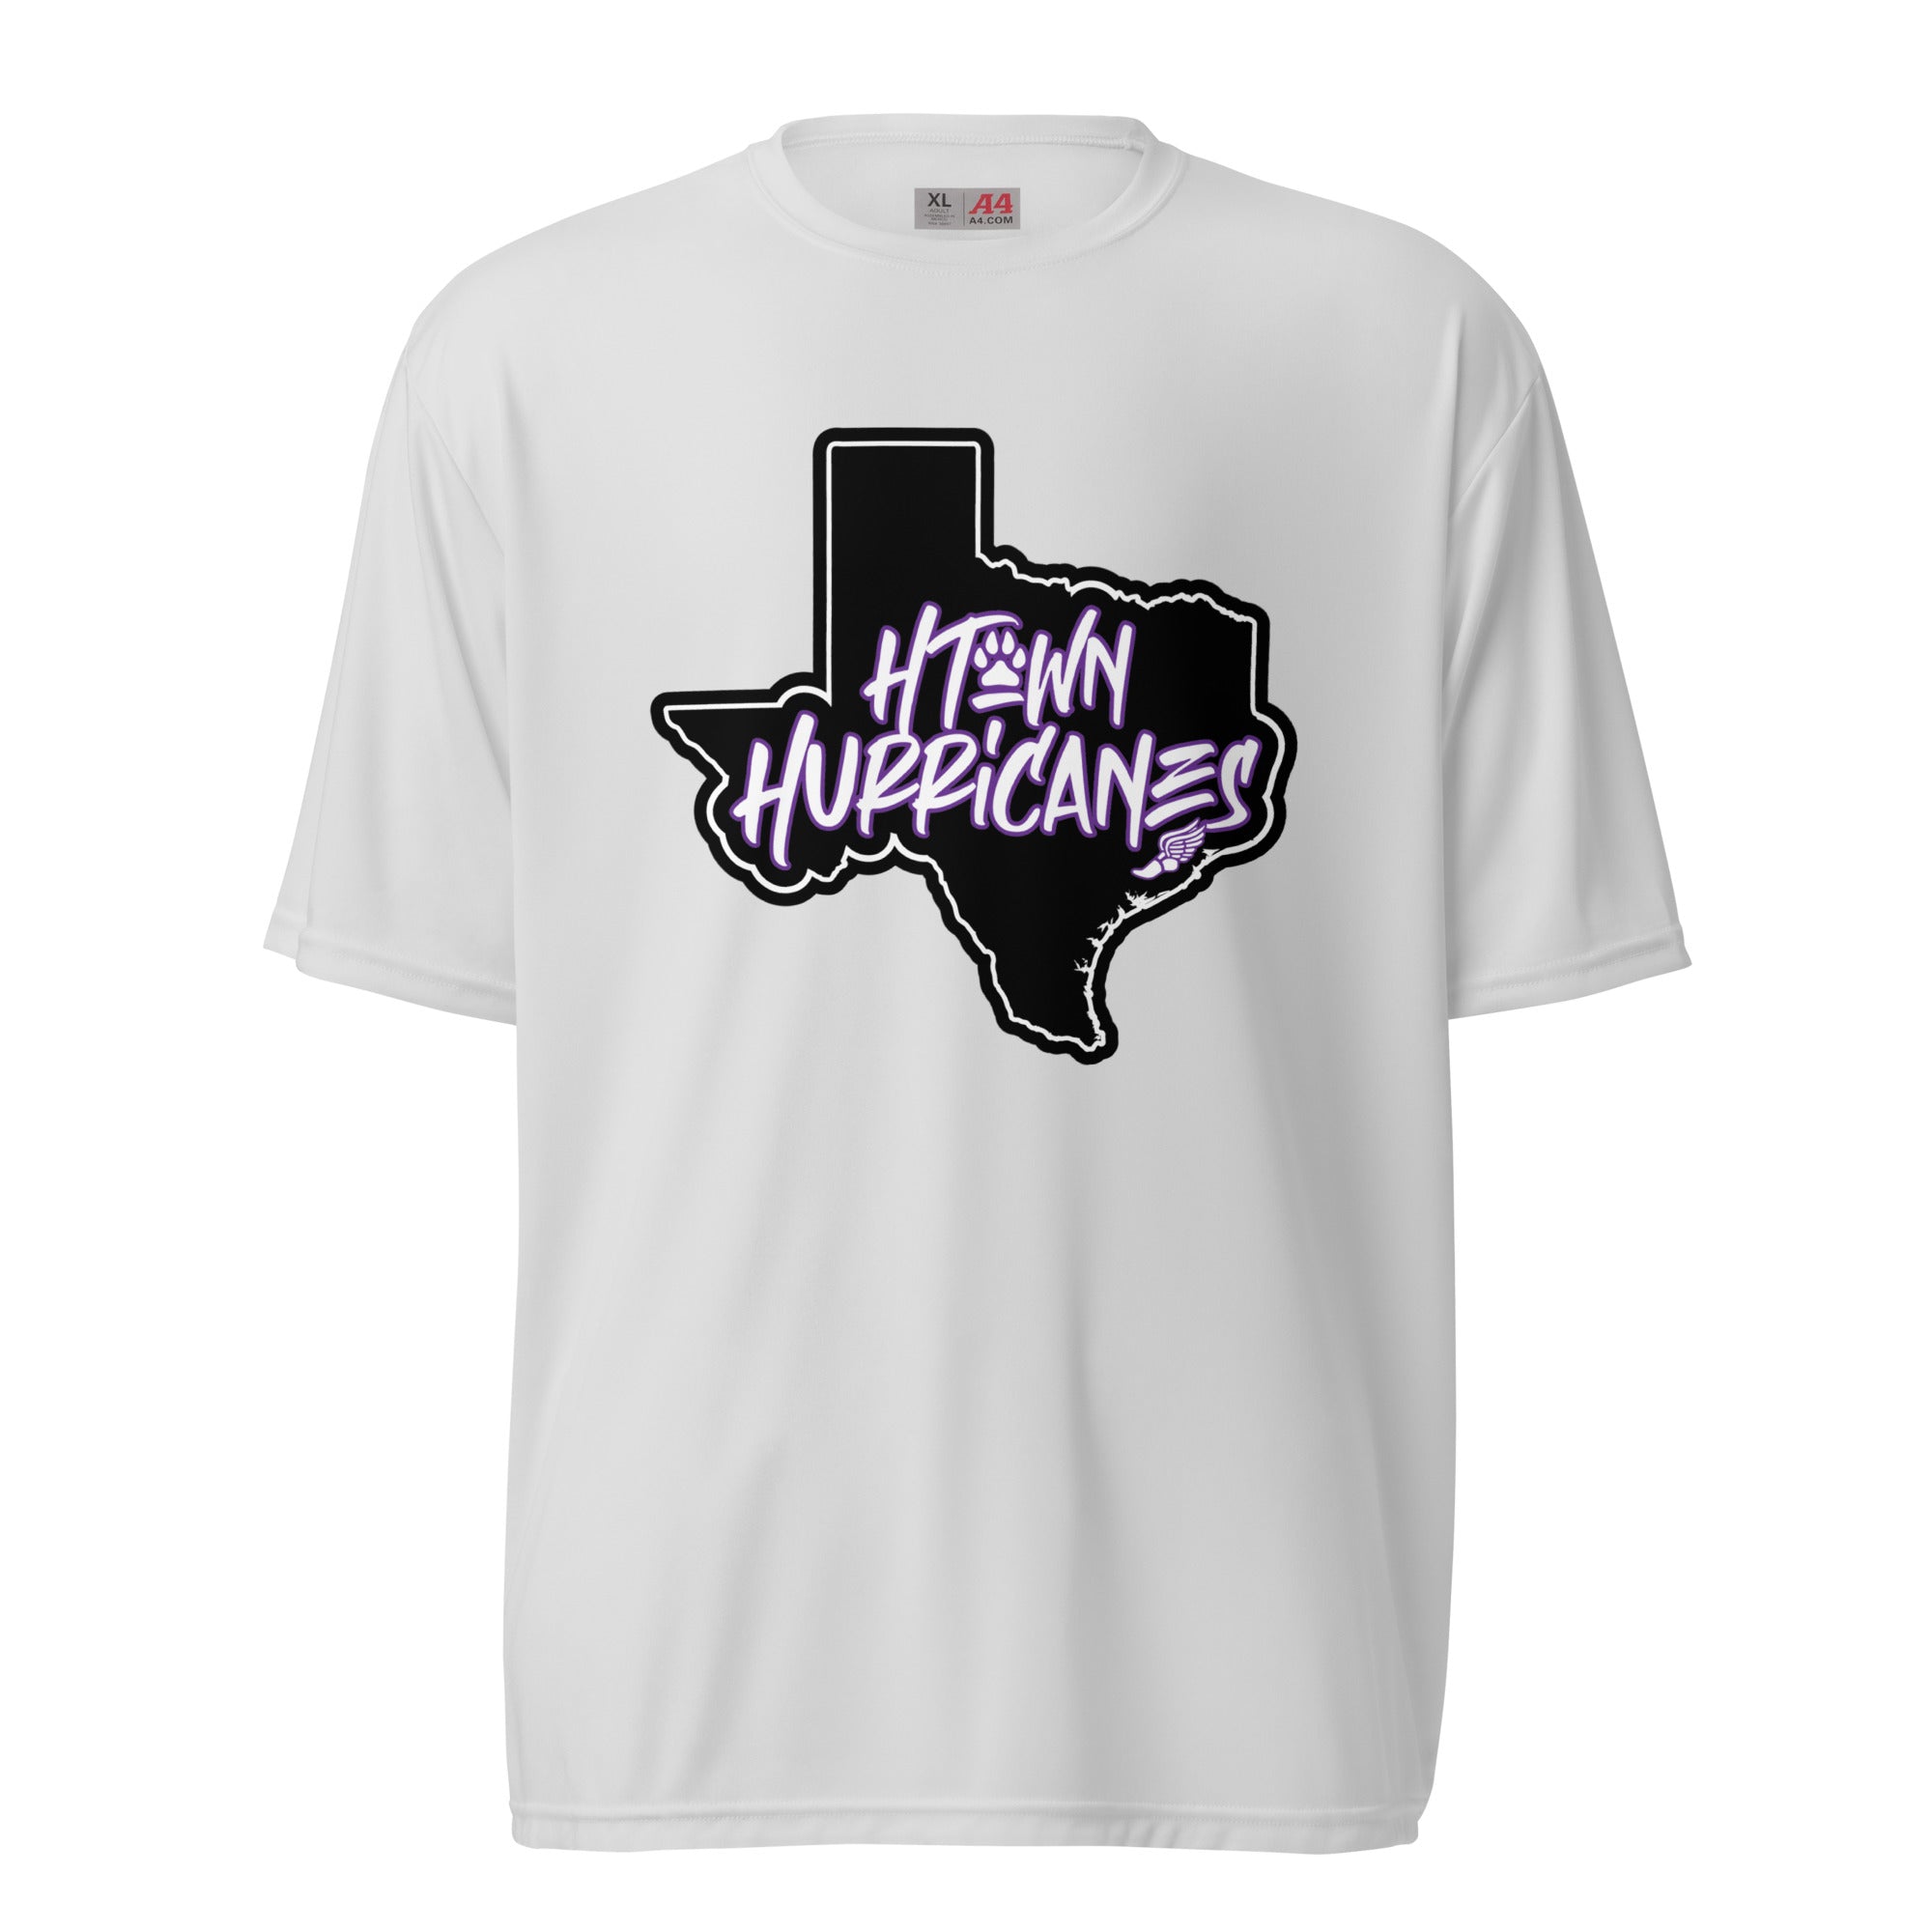 H-Town Hurricanes Unisex performance crew neck t-shirt